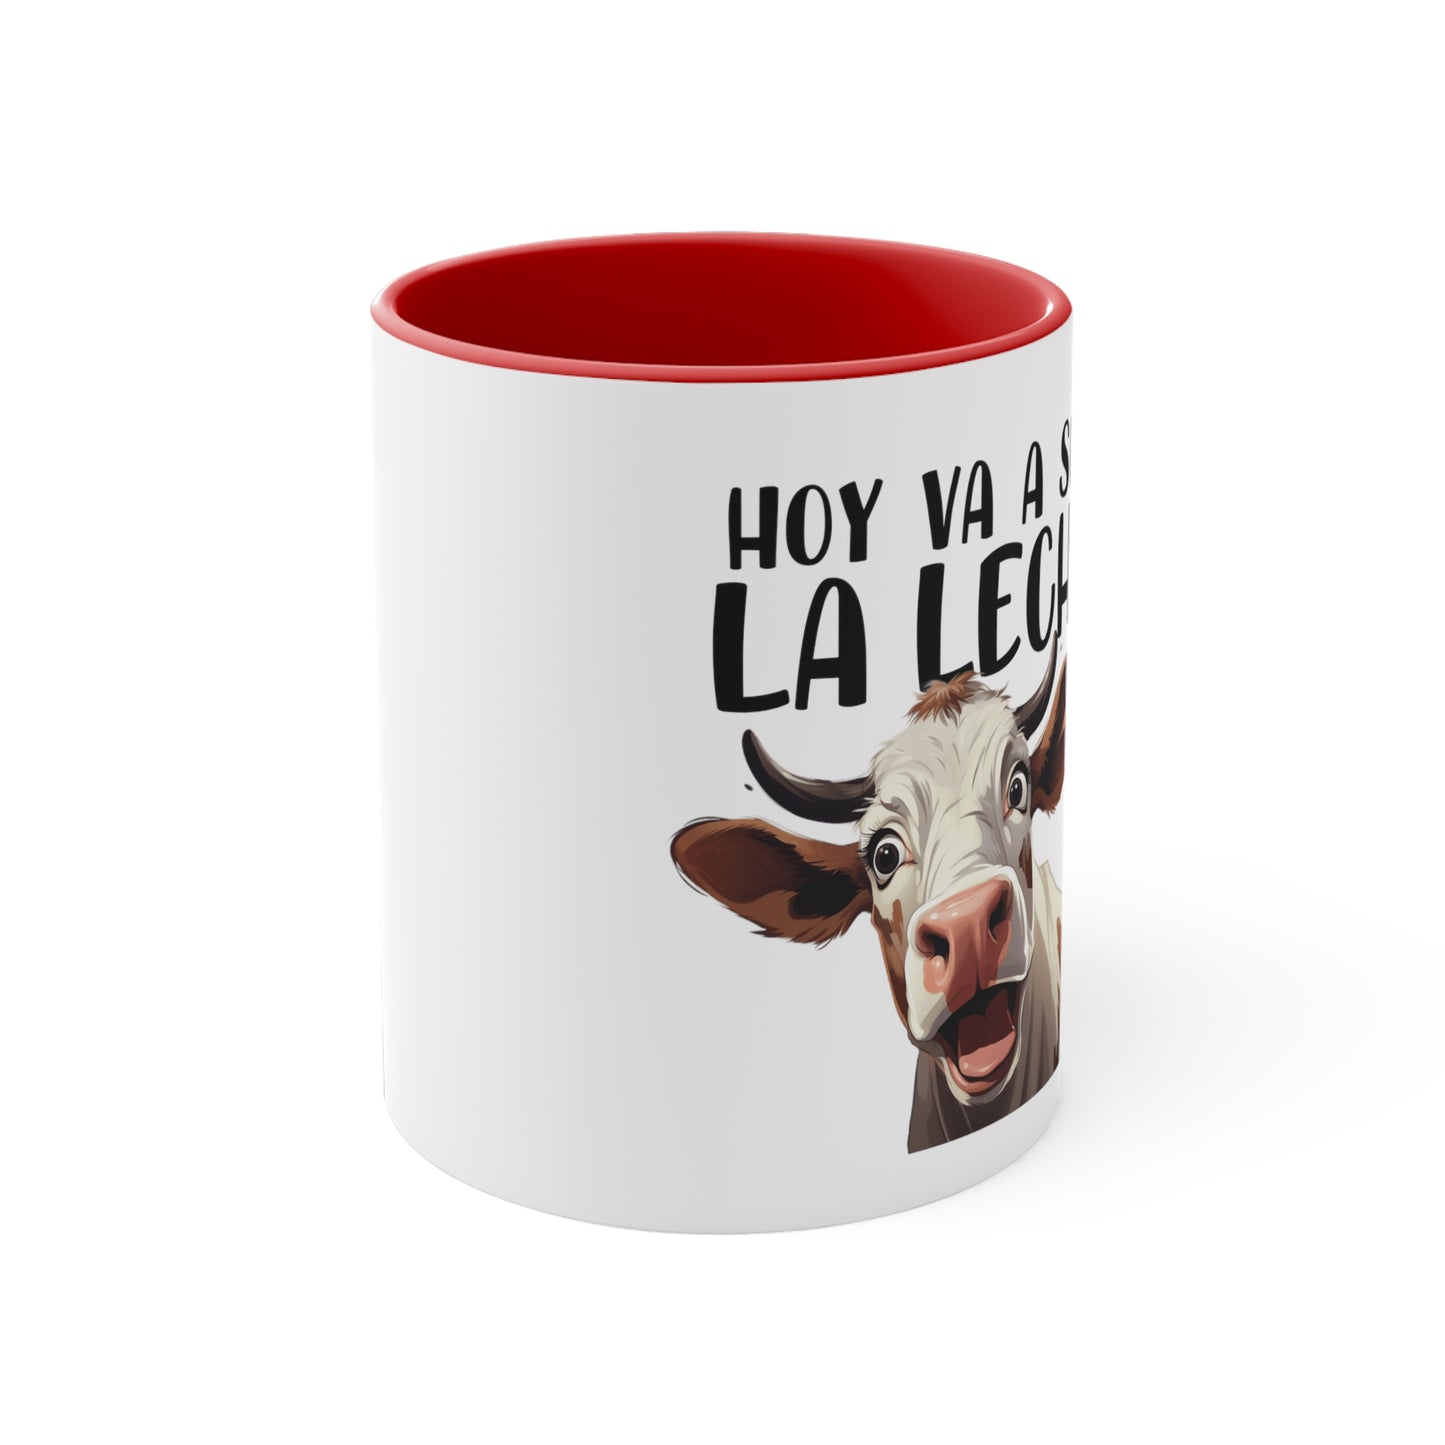 Hoy va a ser la Leche - Taza para cafe, te o chocolate / Accent Coffee Mug, 11oz